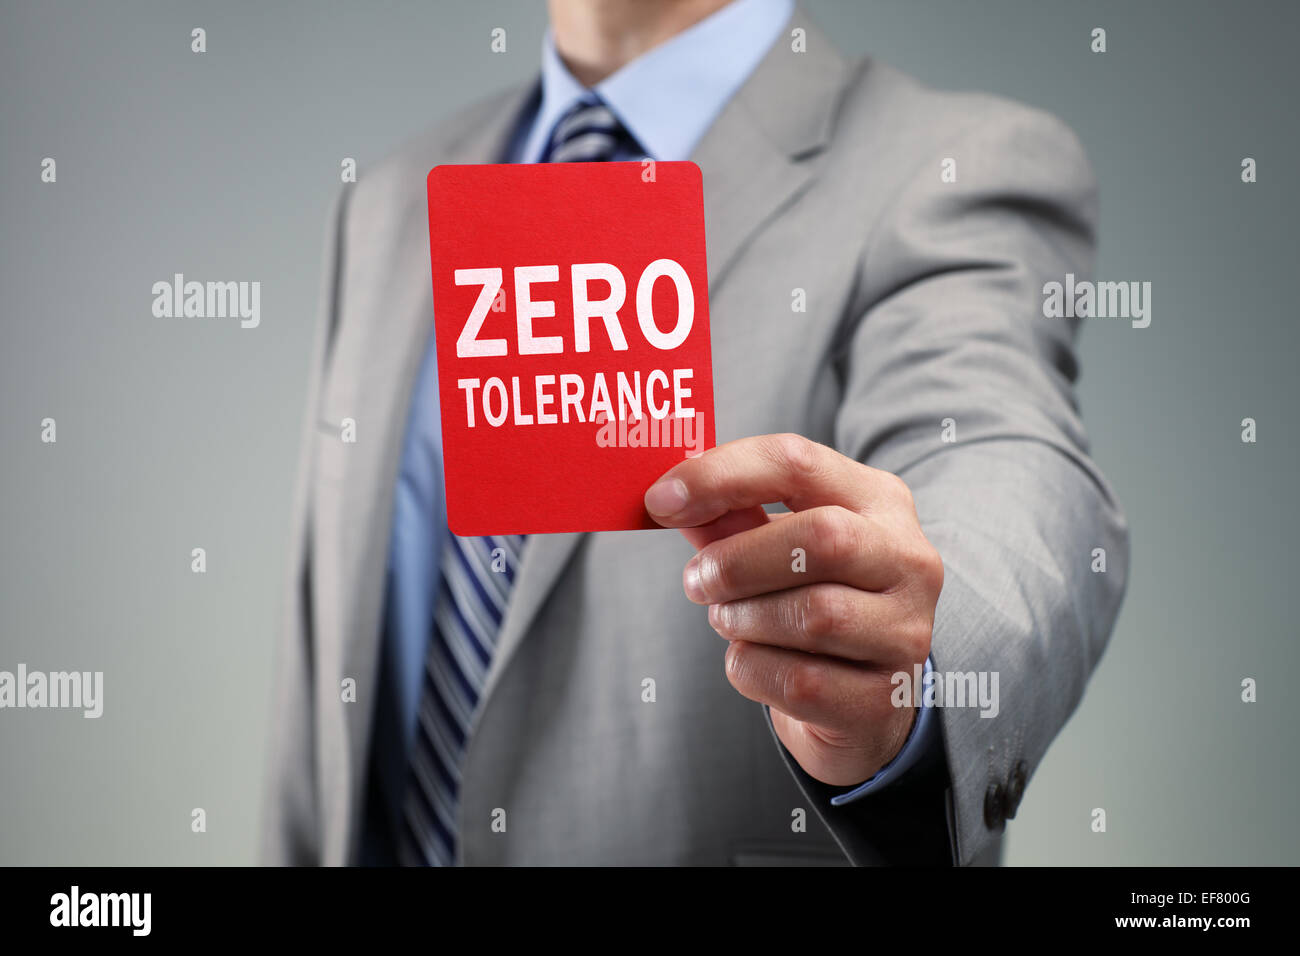 Empresario mostrando la tarjeta roja de tolerancia cero Foto de stock